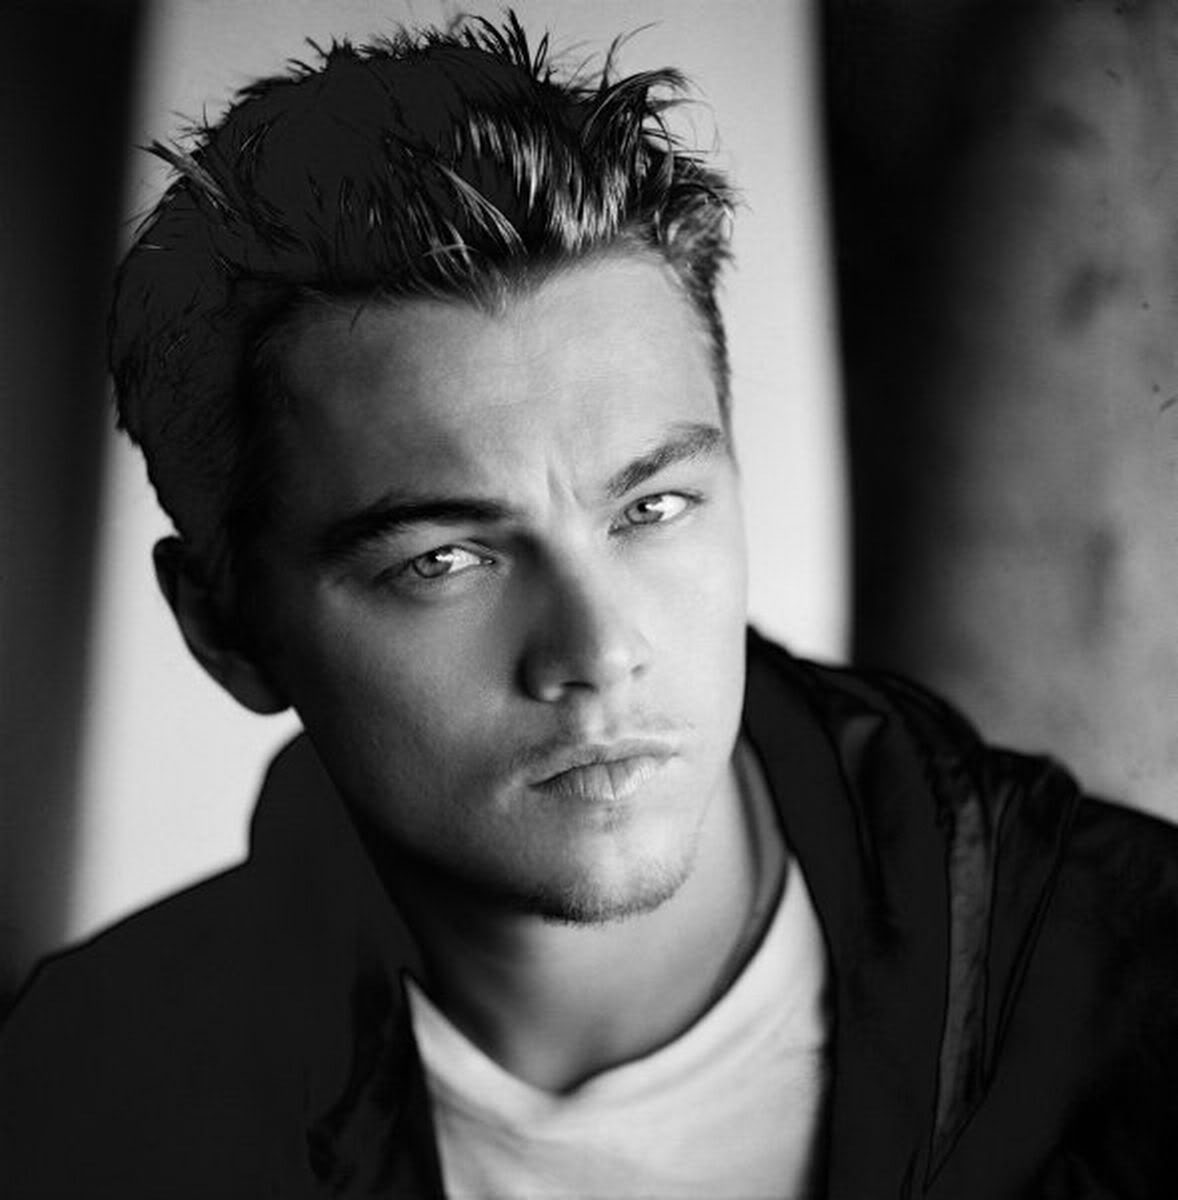 Leonardo DiCaprio photo 1159 of 1142 pics, wallpaper - photo #1157818 ...